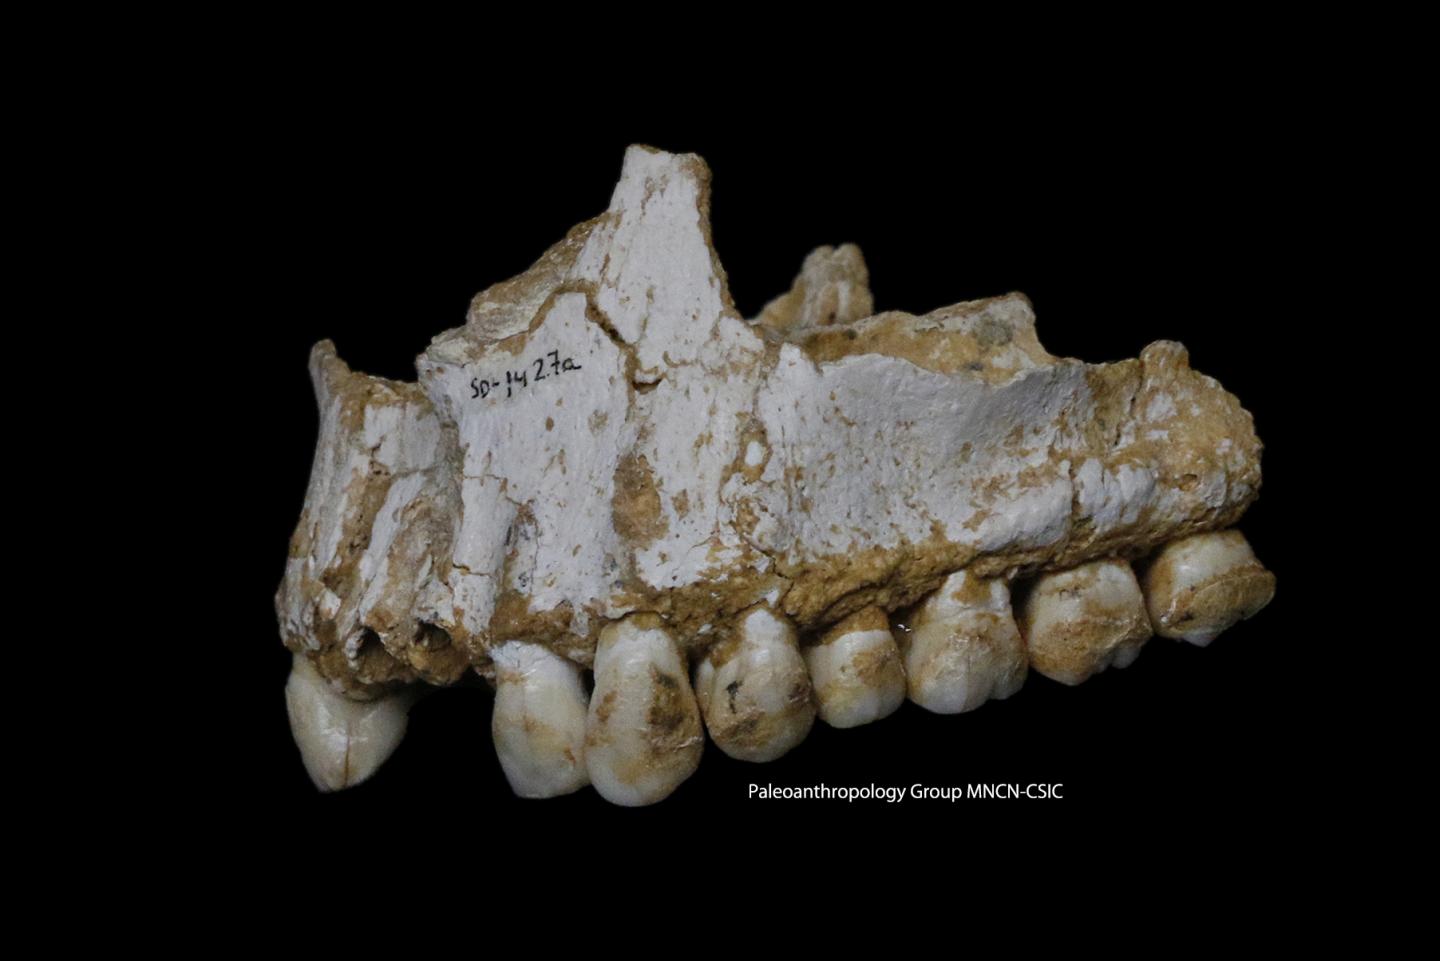 Dental Plaque DNA Shows Neandertals Used 'Aspirin'